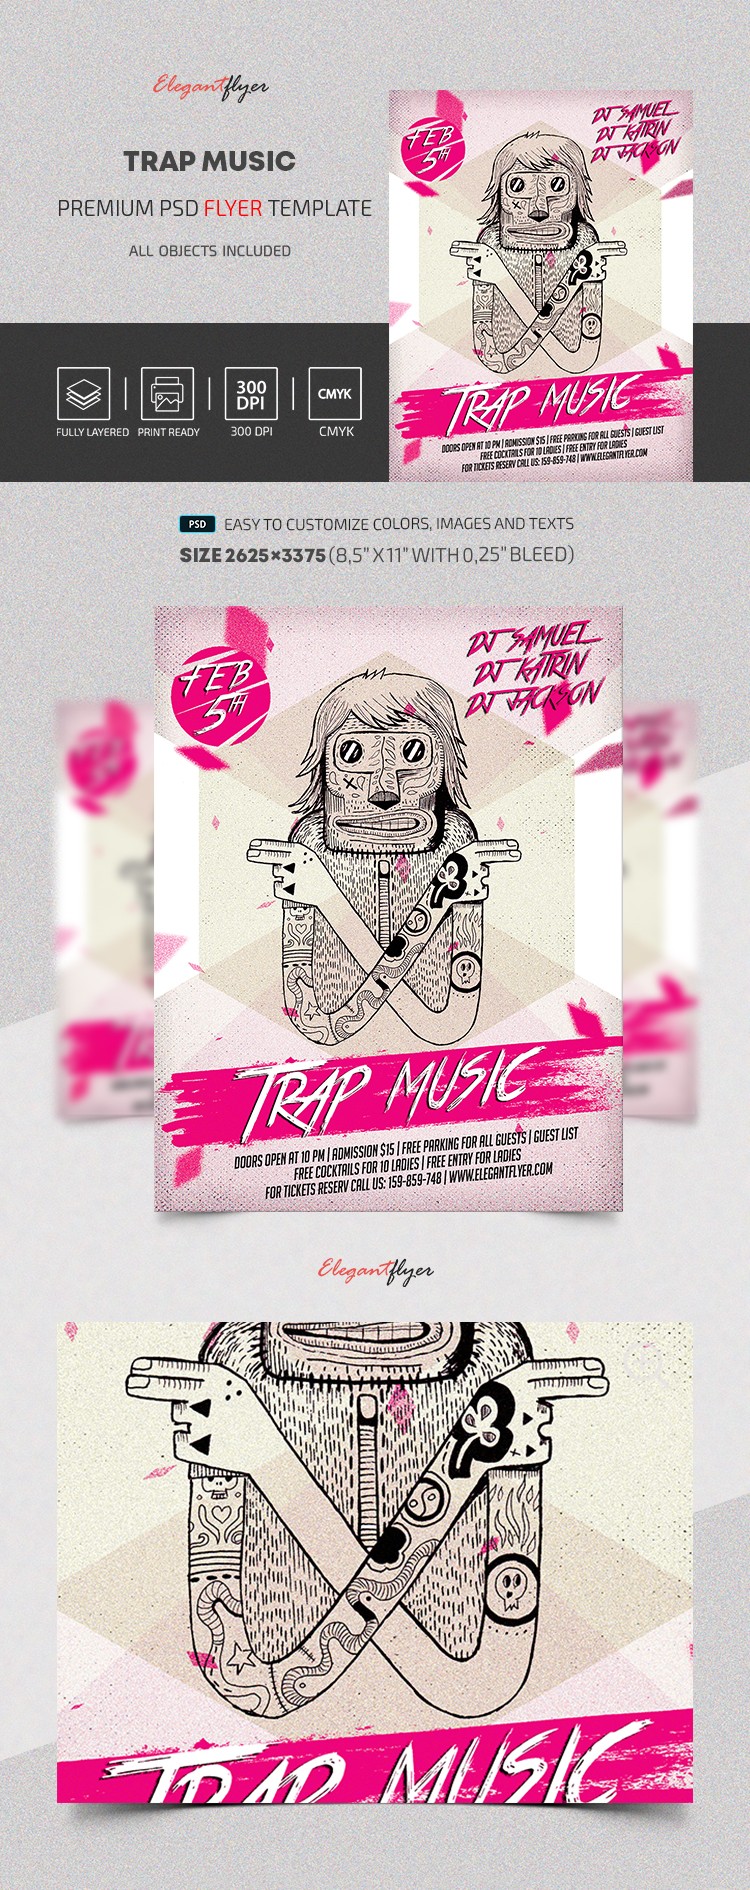 Trap Music by ElegantFlyer